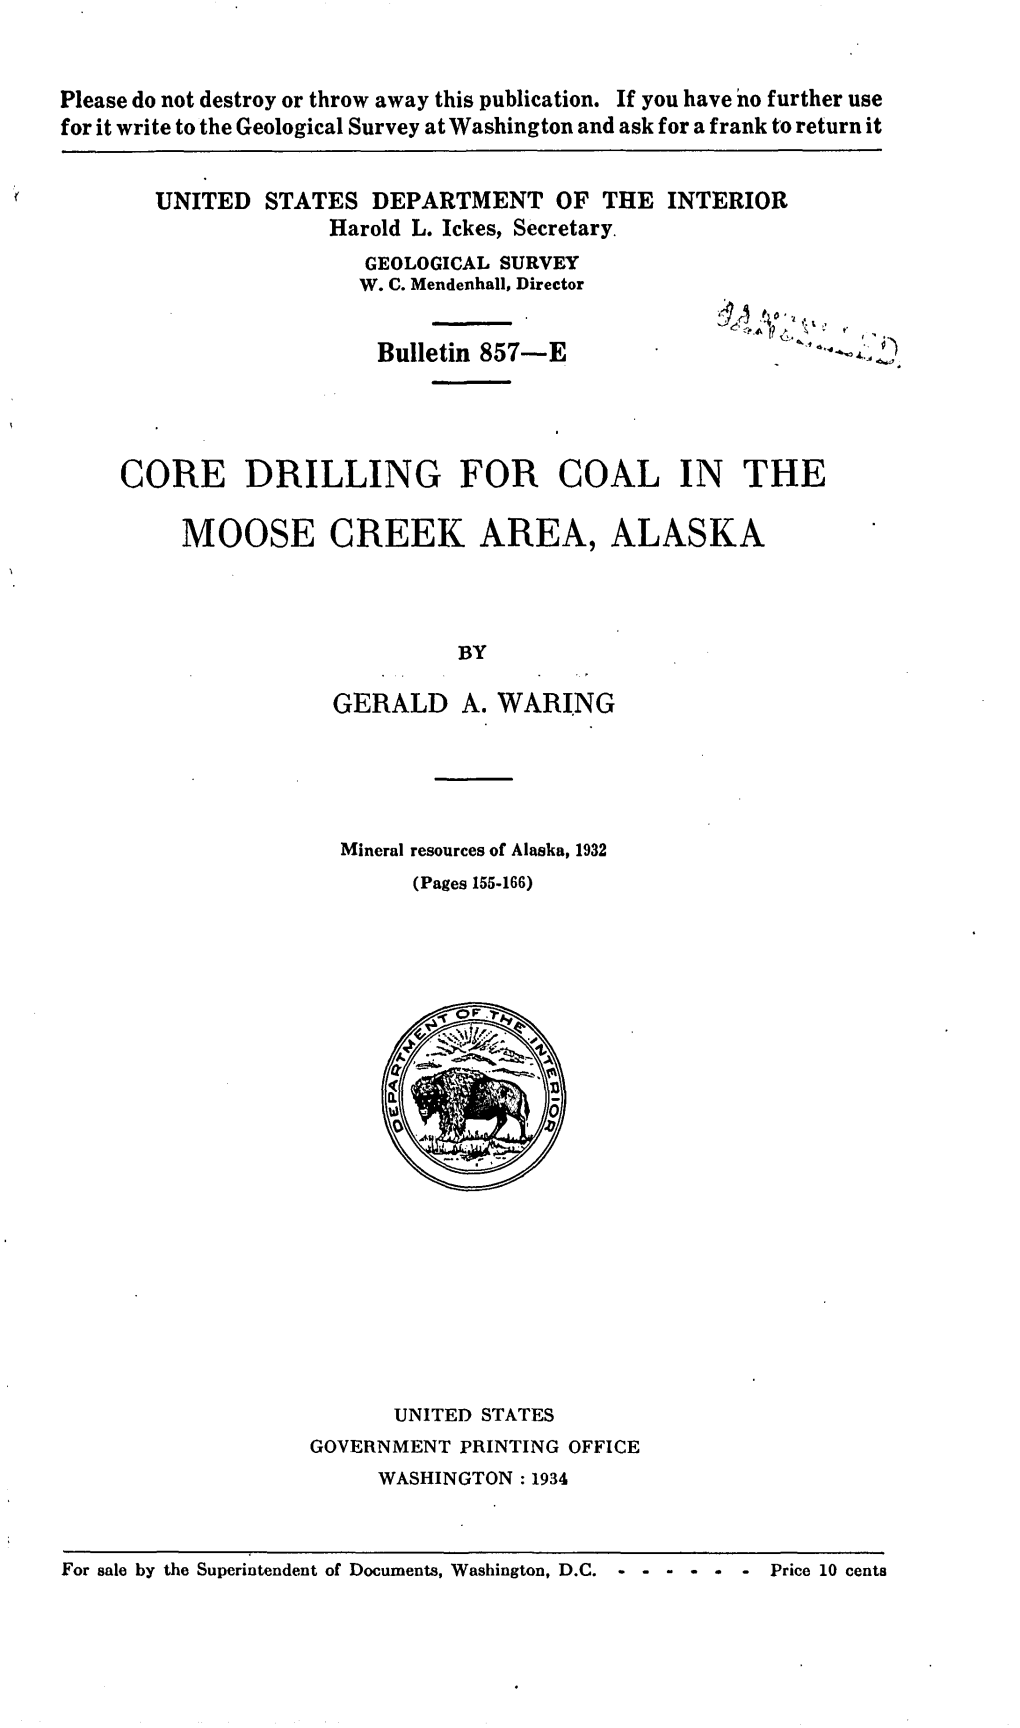 Core Drilling for Coal in the Moose Creek Area, Alaska